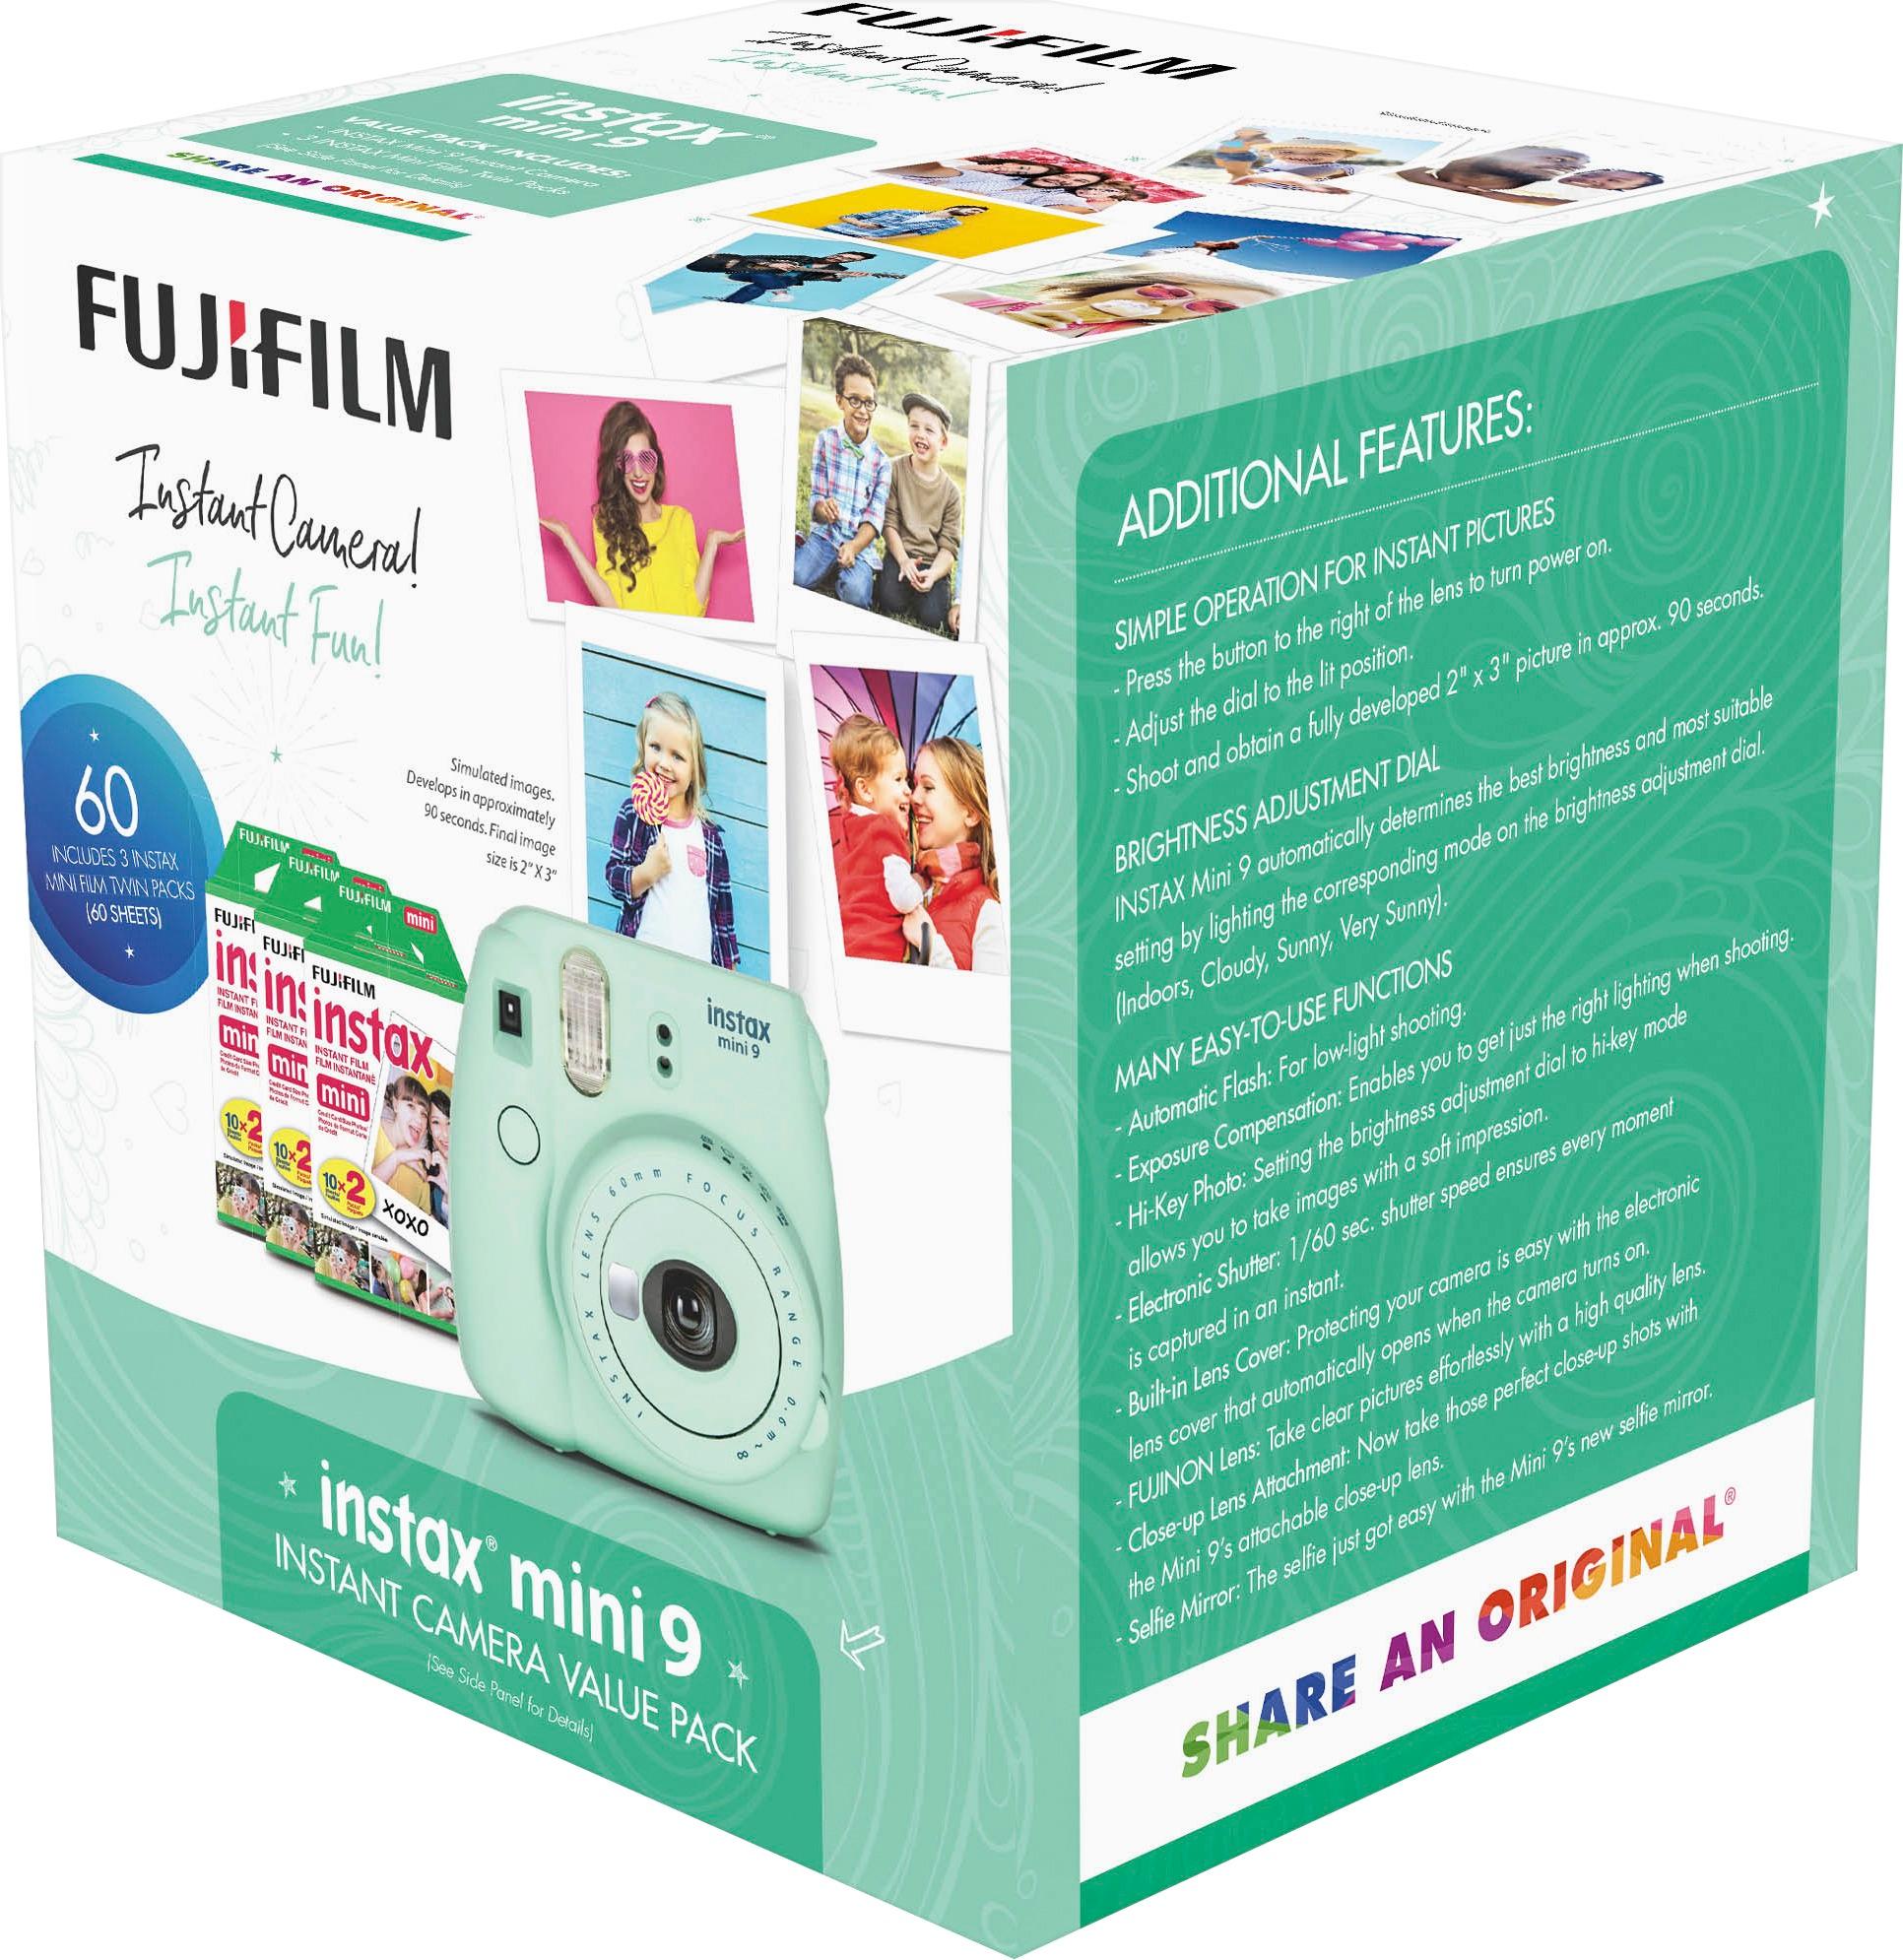 Bezet teugels Spuug uit Best Buy: Fujifilm instax mini 9 Instant Film Camera Value Pack Mint Green  600019004